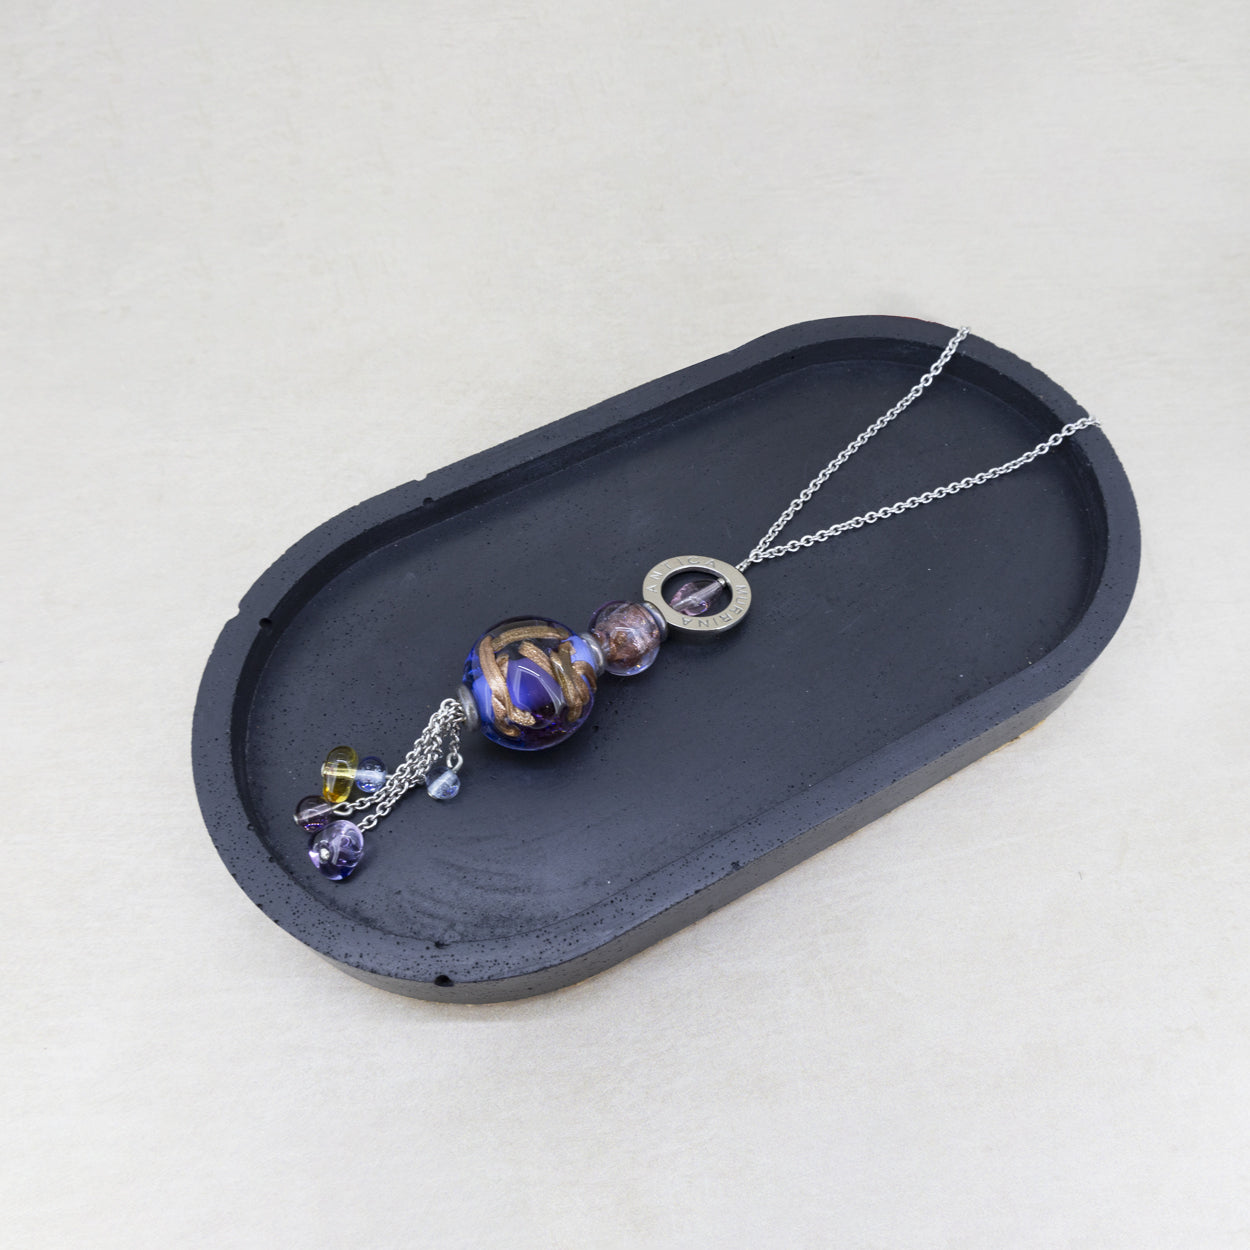 Antica Murrina Duna Mixed Purple Glass Necklace CO685A05